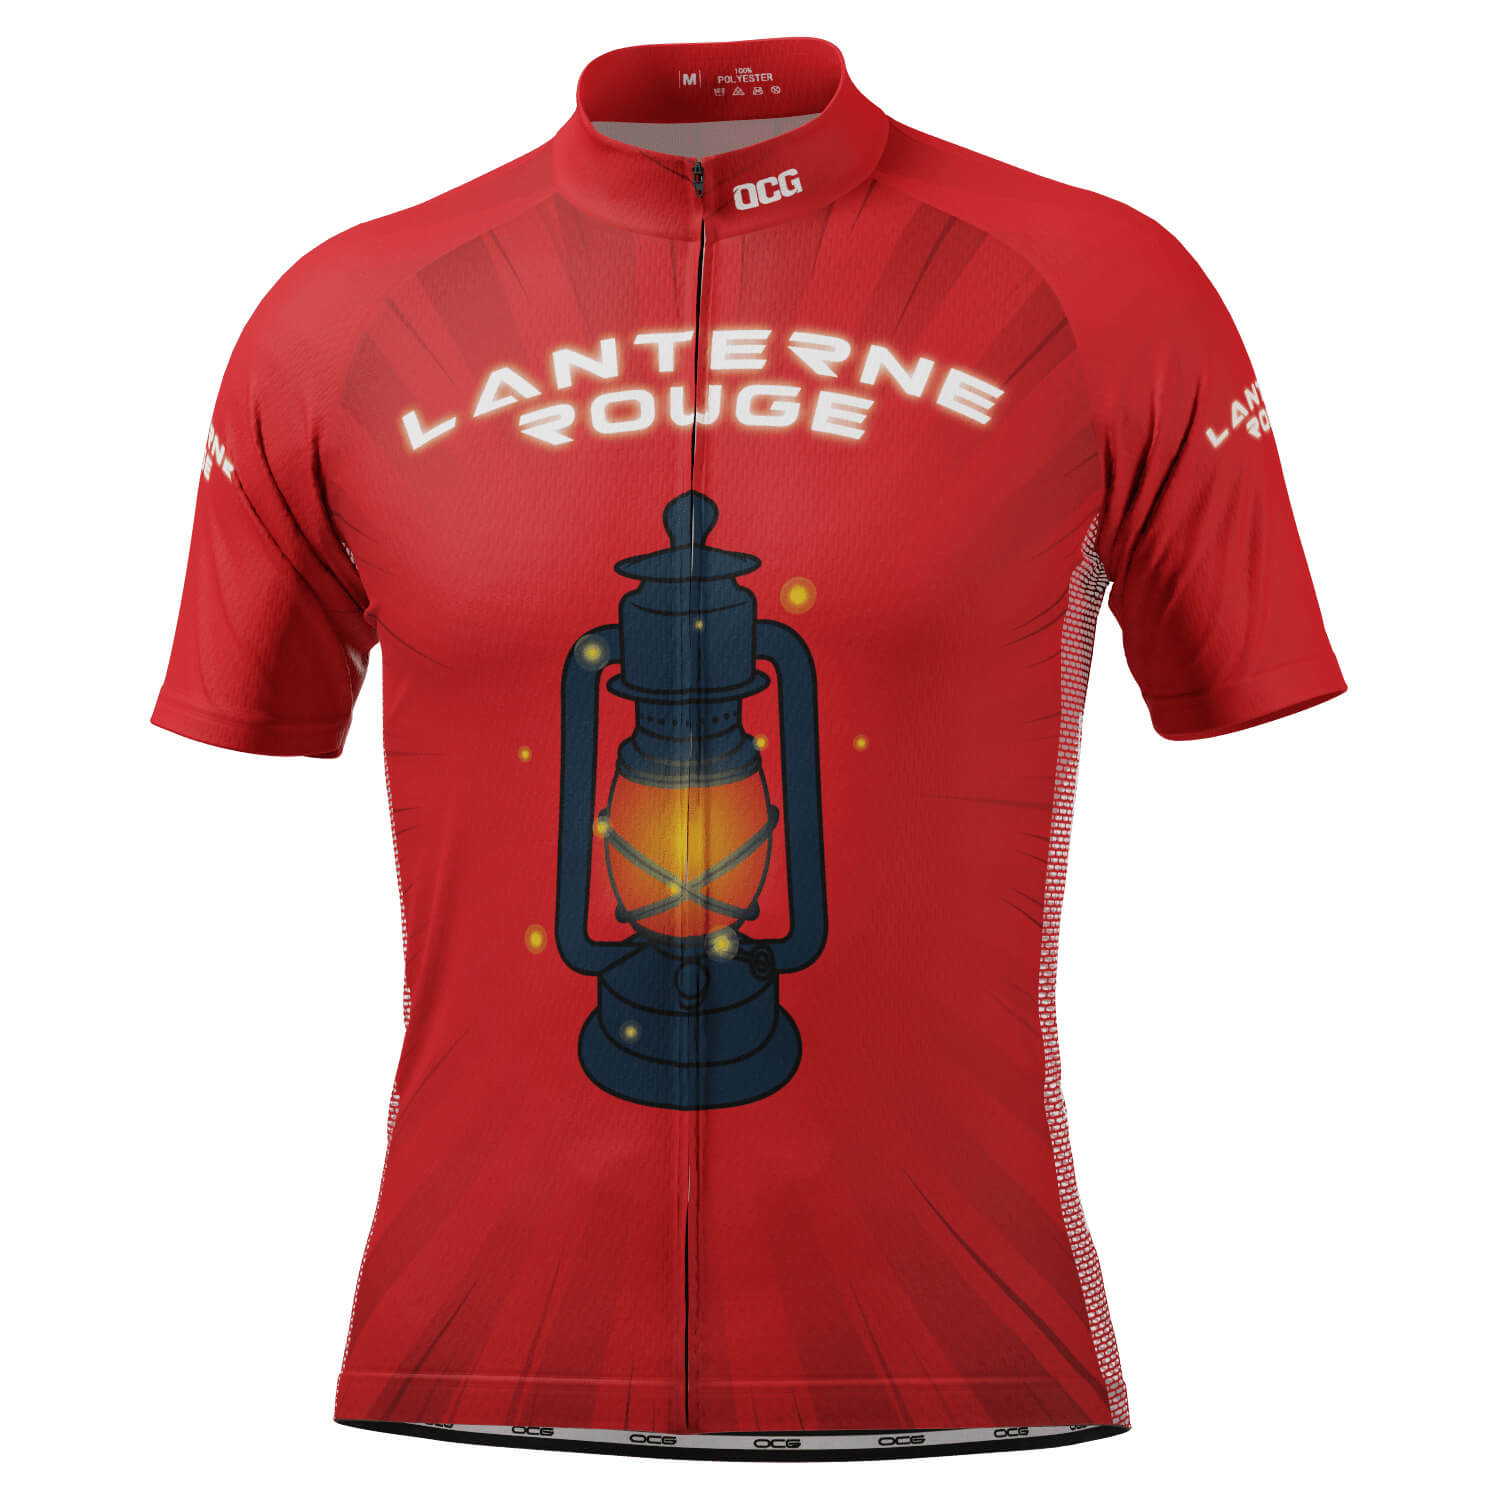 Men's Lanterne Rouge Red Lantern Short Sleeve Cycling Jersey